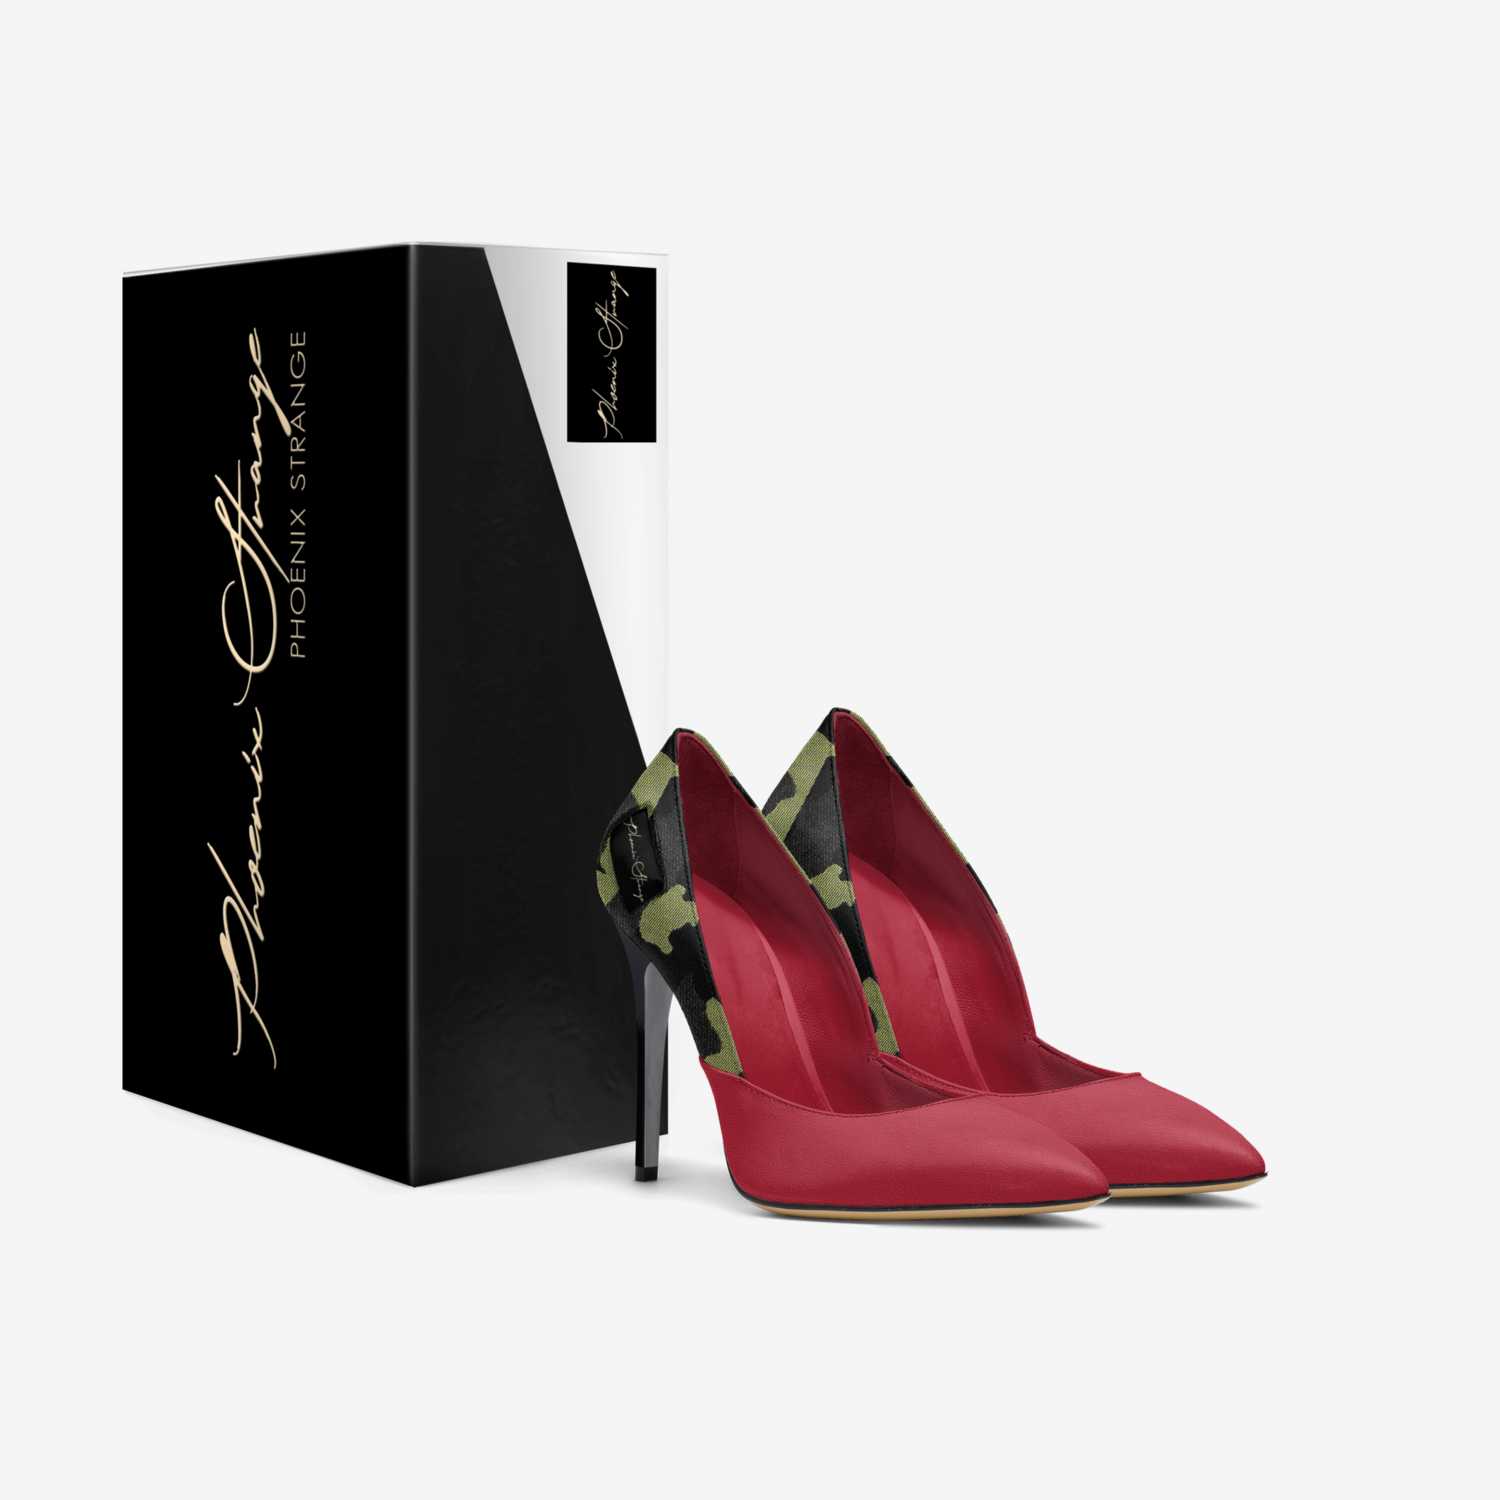 Mrs. Strange custom made in Italy shoes by Phoenix Strange | Box view